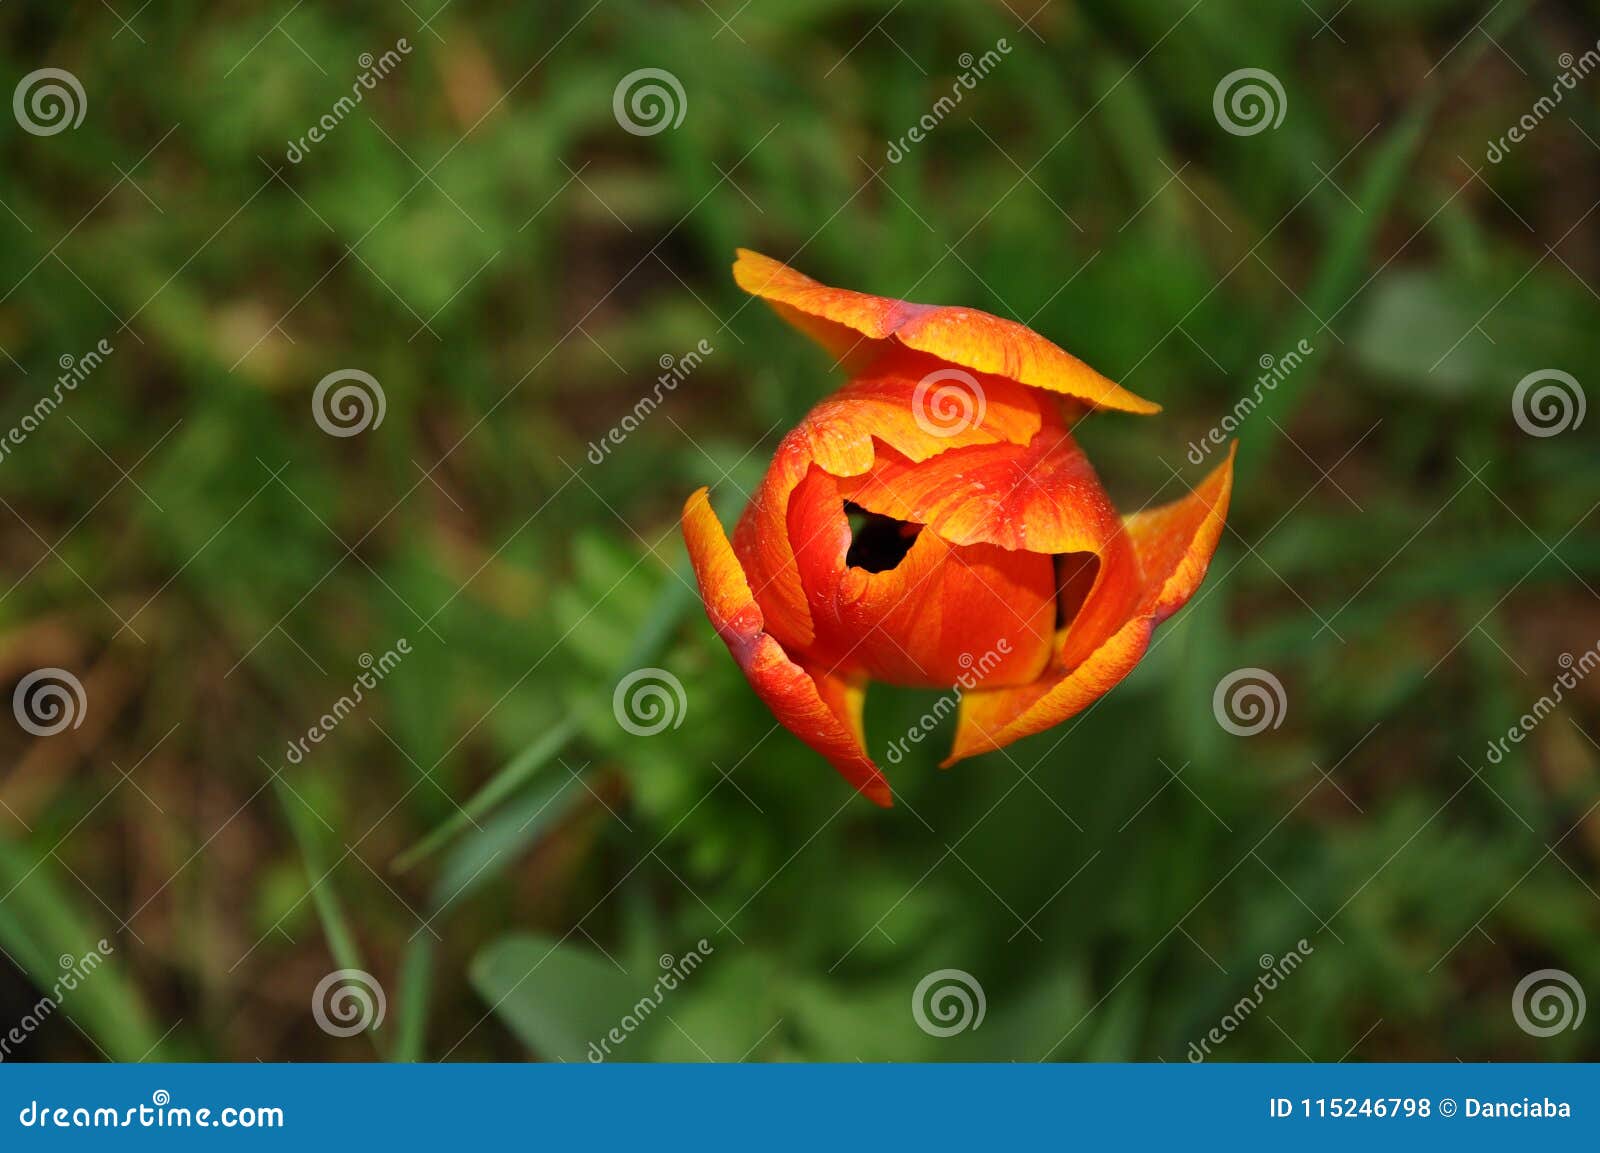 orange tulipan in a garden